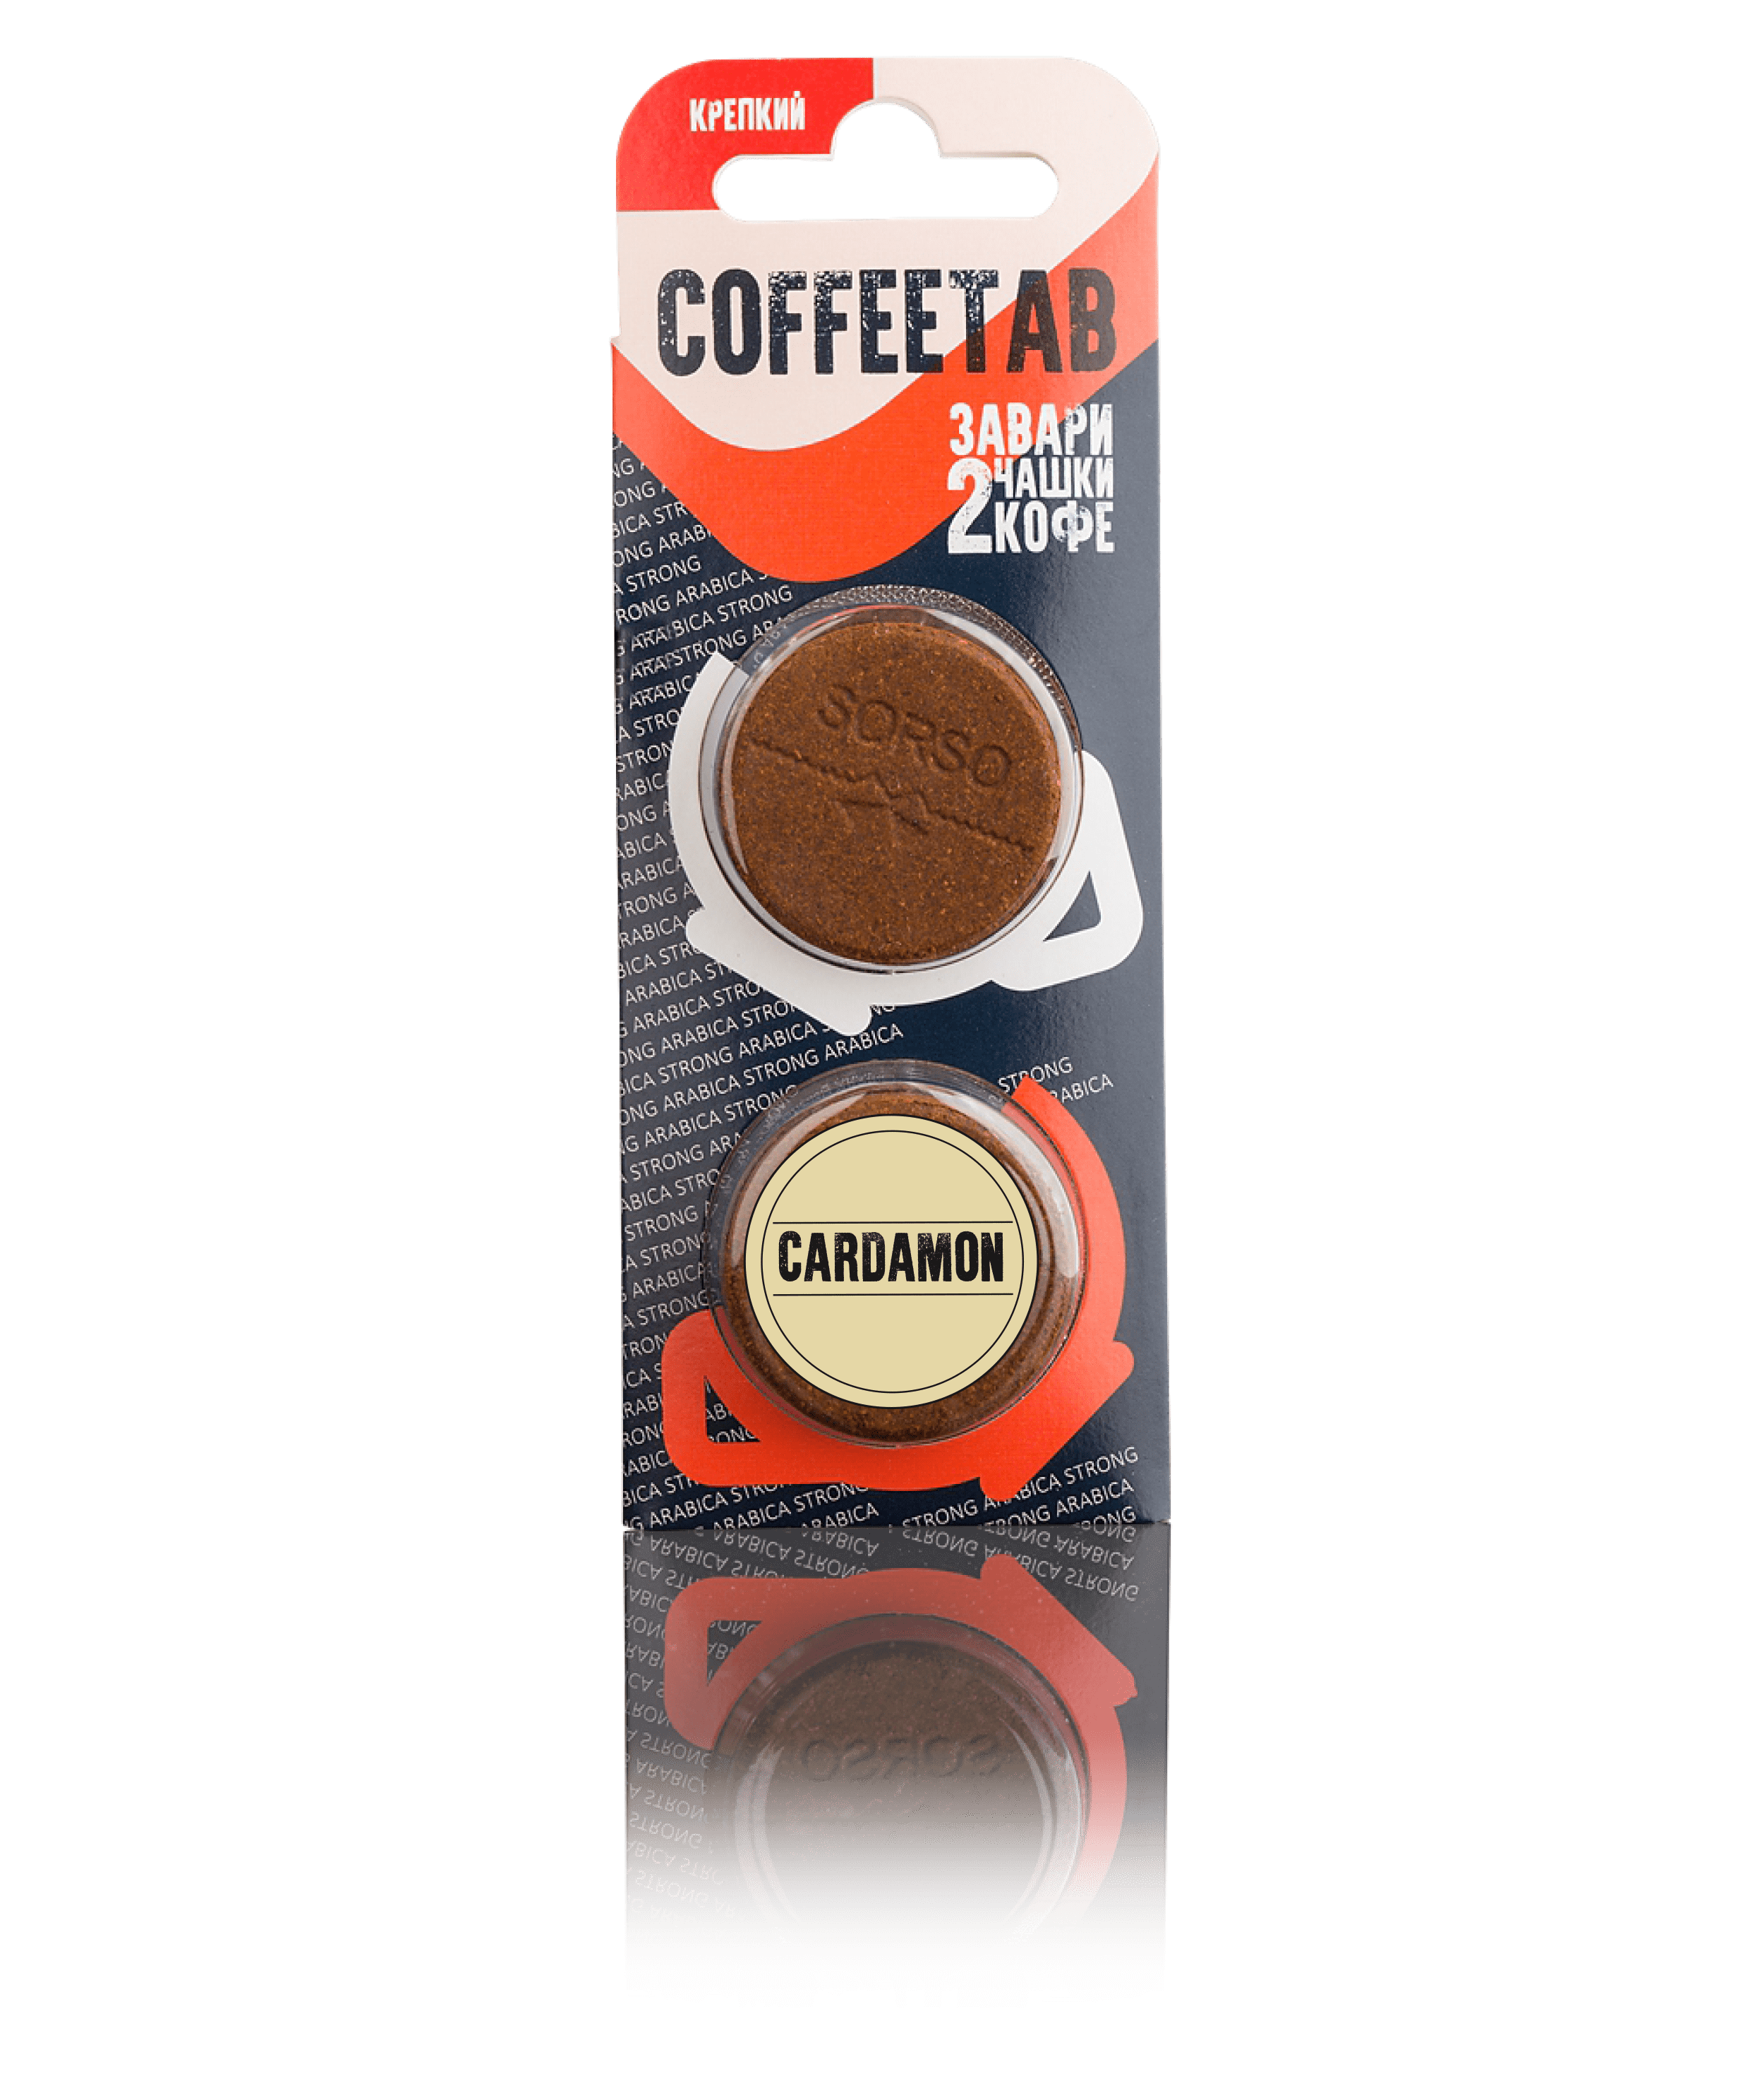 COFFEETAB крепкий с кардамоном (2 чашки кофе)